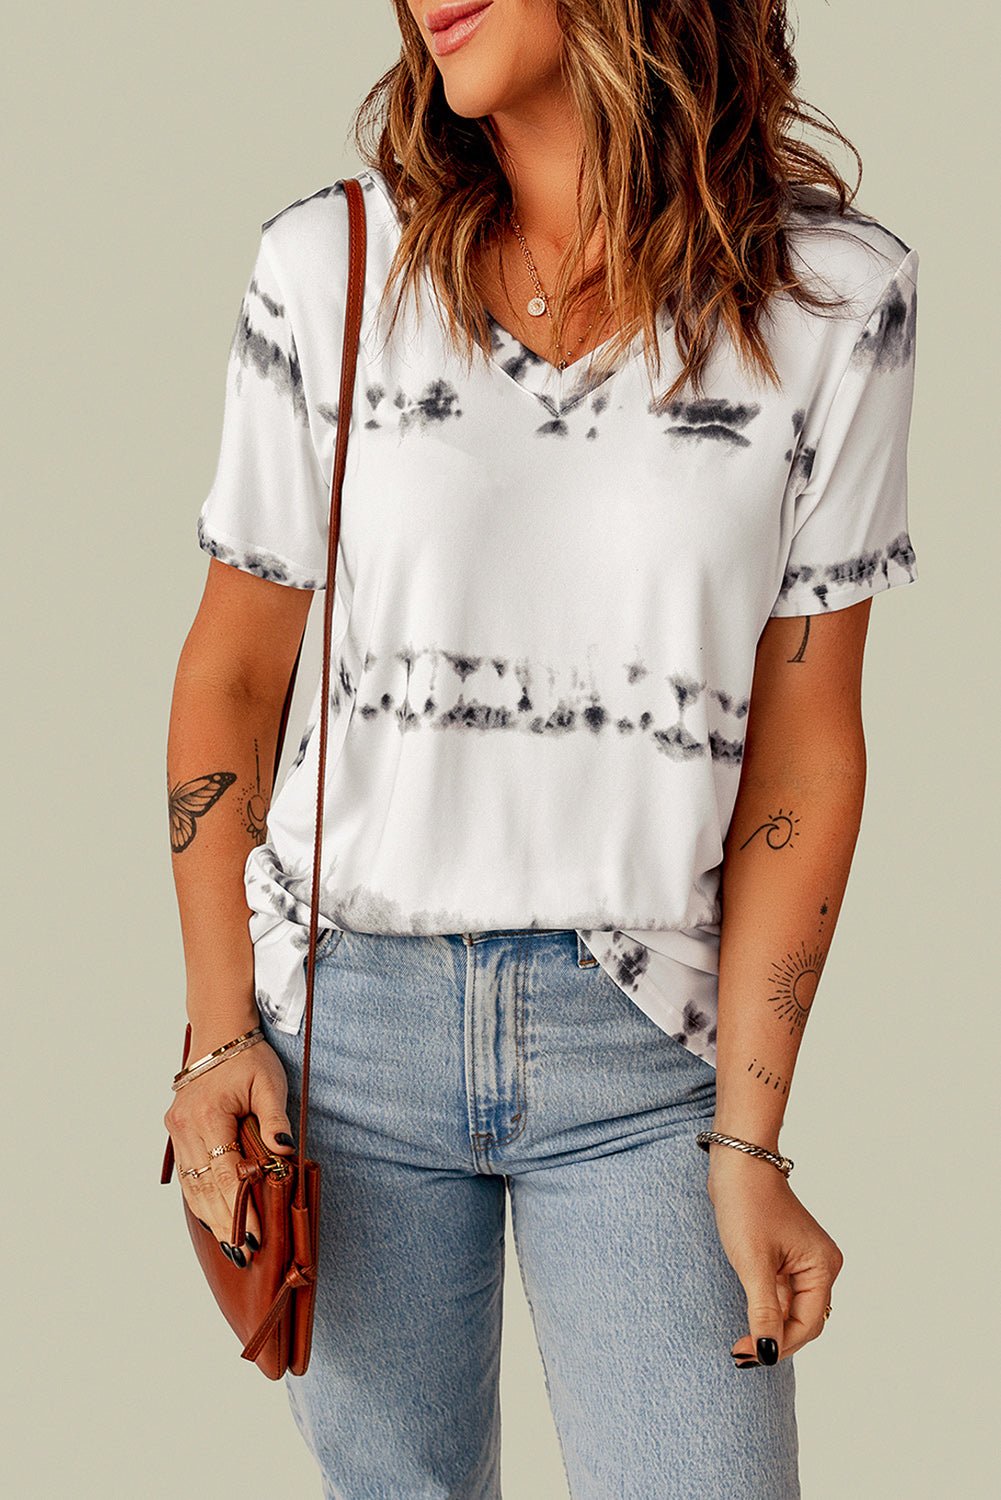 Printed V-Neck Short Sleeve Top - Fashion Girl Online Store